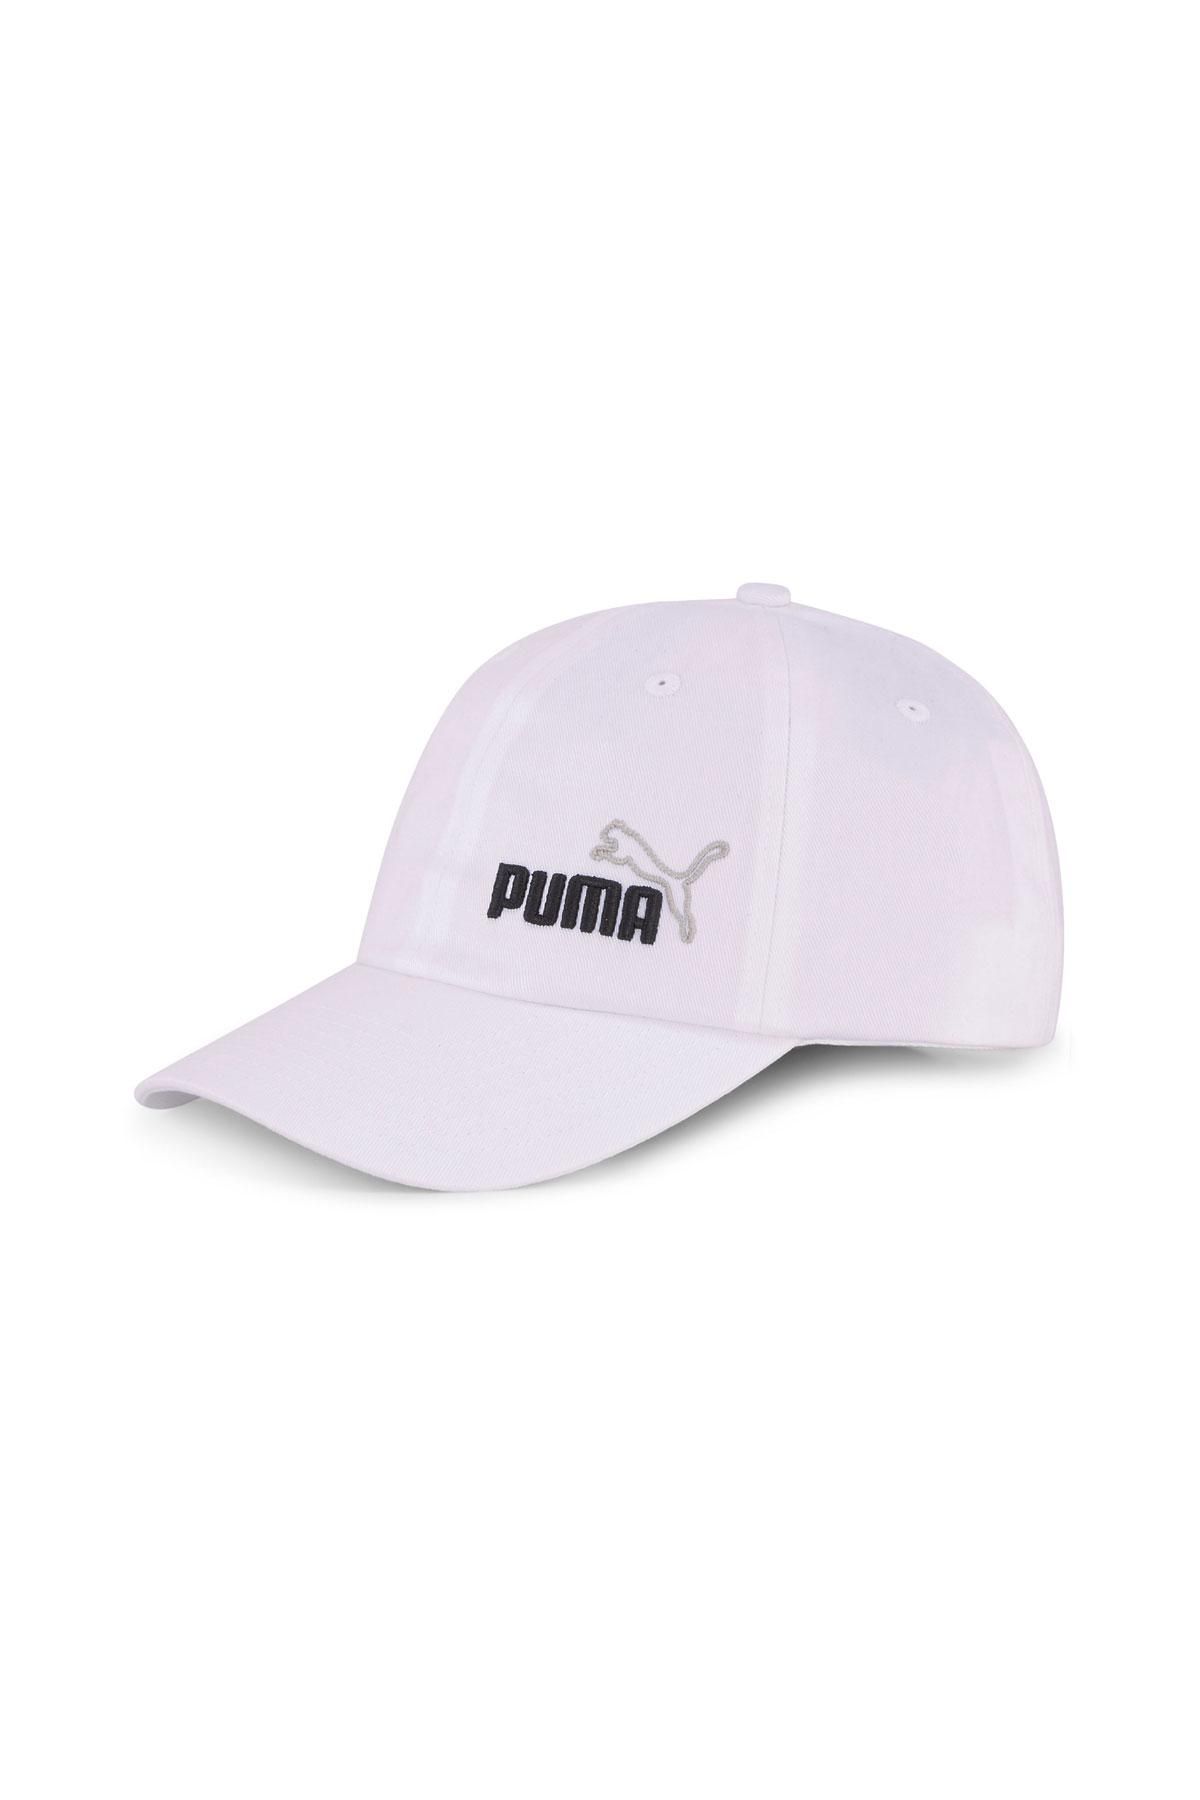 PUMA White White-No 1 Cap Men Puma Ess Caps Ii